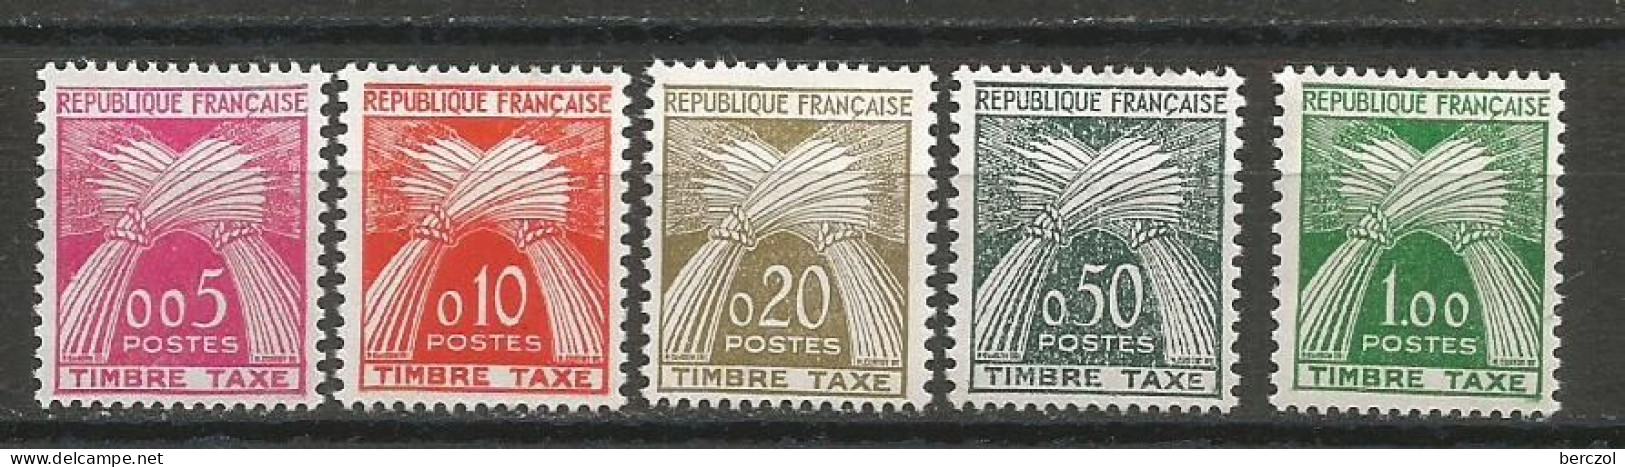 FRANCE ANNEE 1960 TAXE LOT DE 5 TP N°90 à 94 NEUFS ** MNH TB COTE 70,00 €  - 1960-.... Nuevos